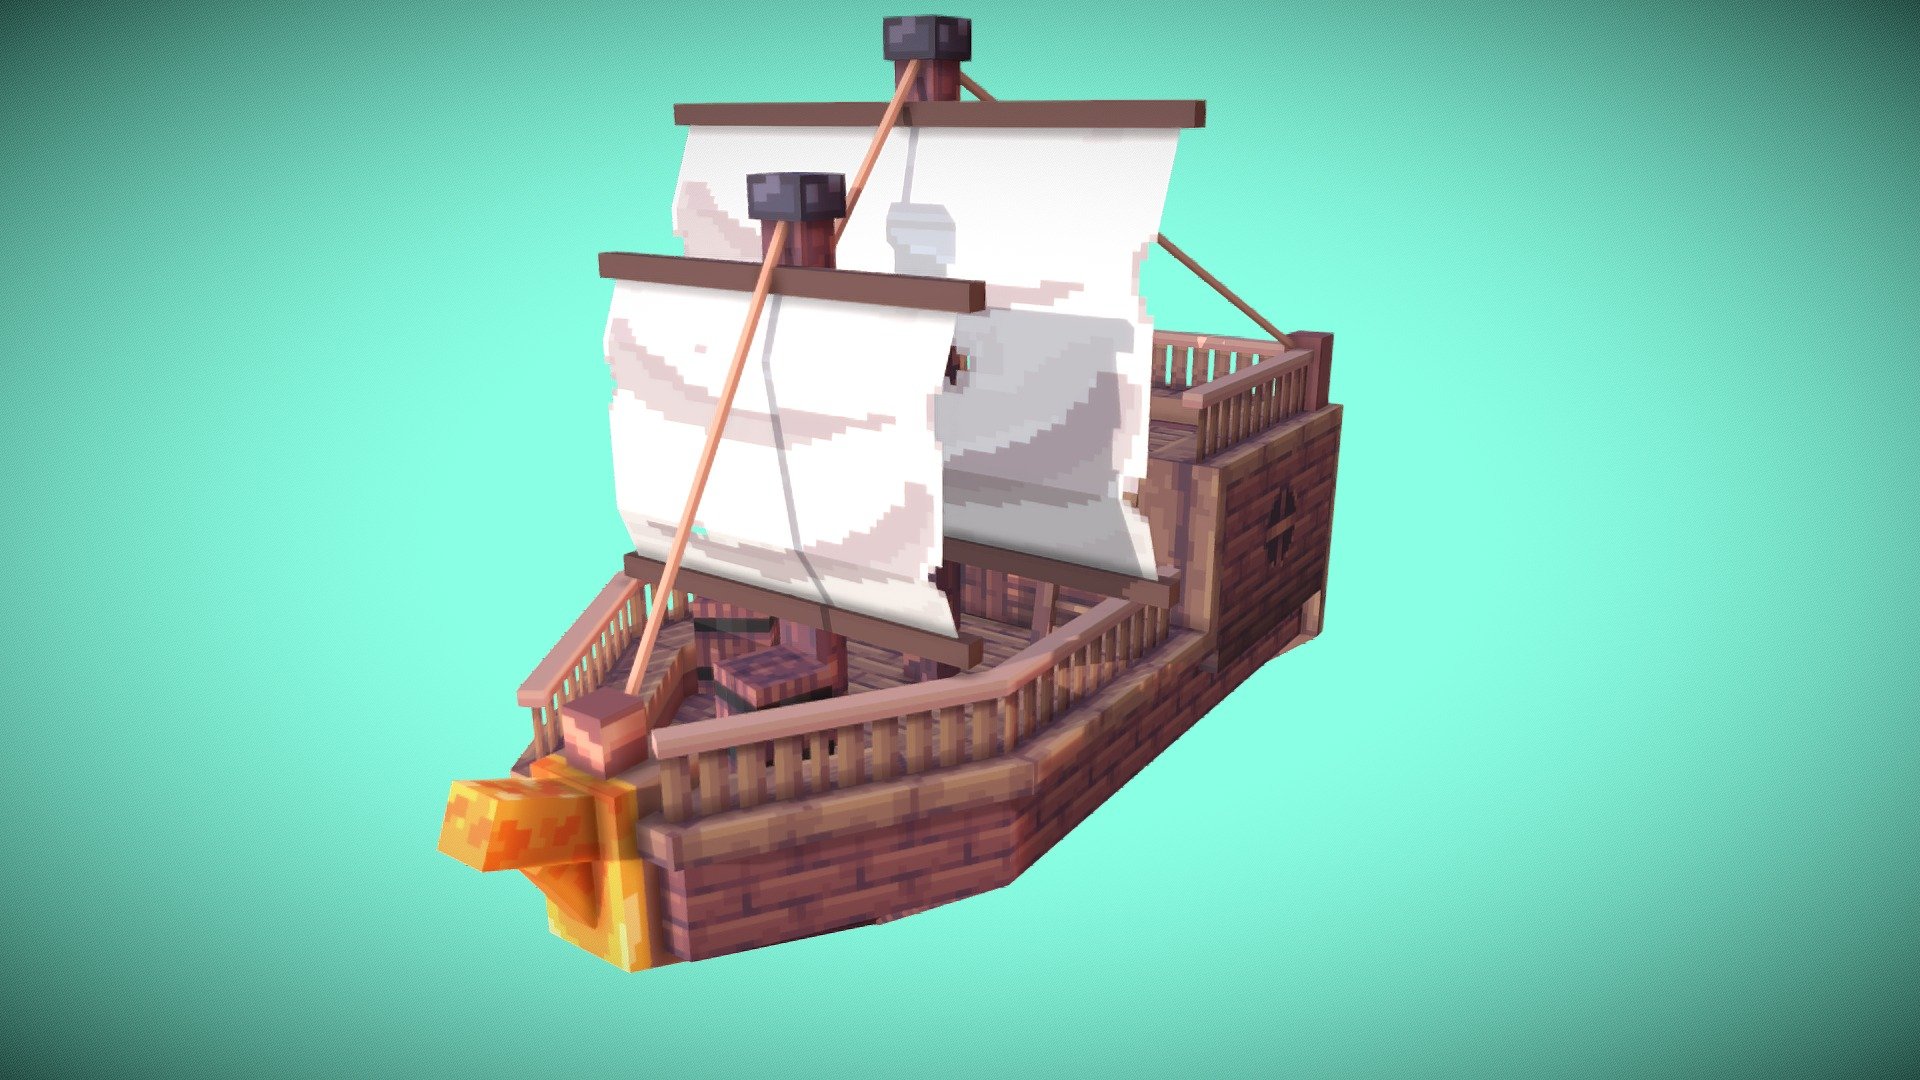 pirate-ship-3d-model-by-sapphire-studios-sapphire-studios-3666763-sketchfab